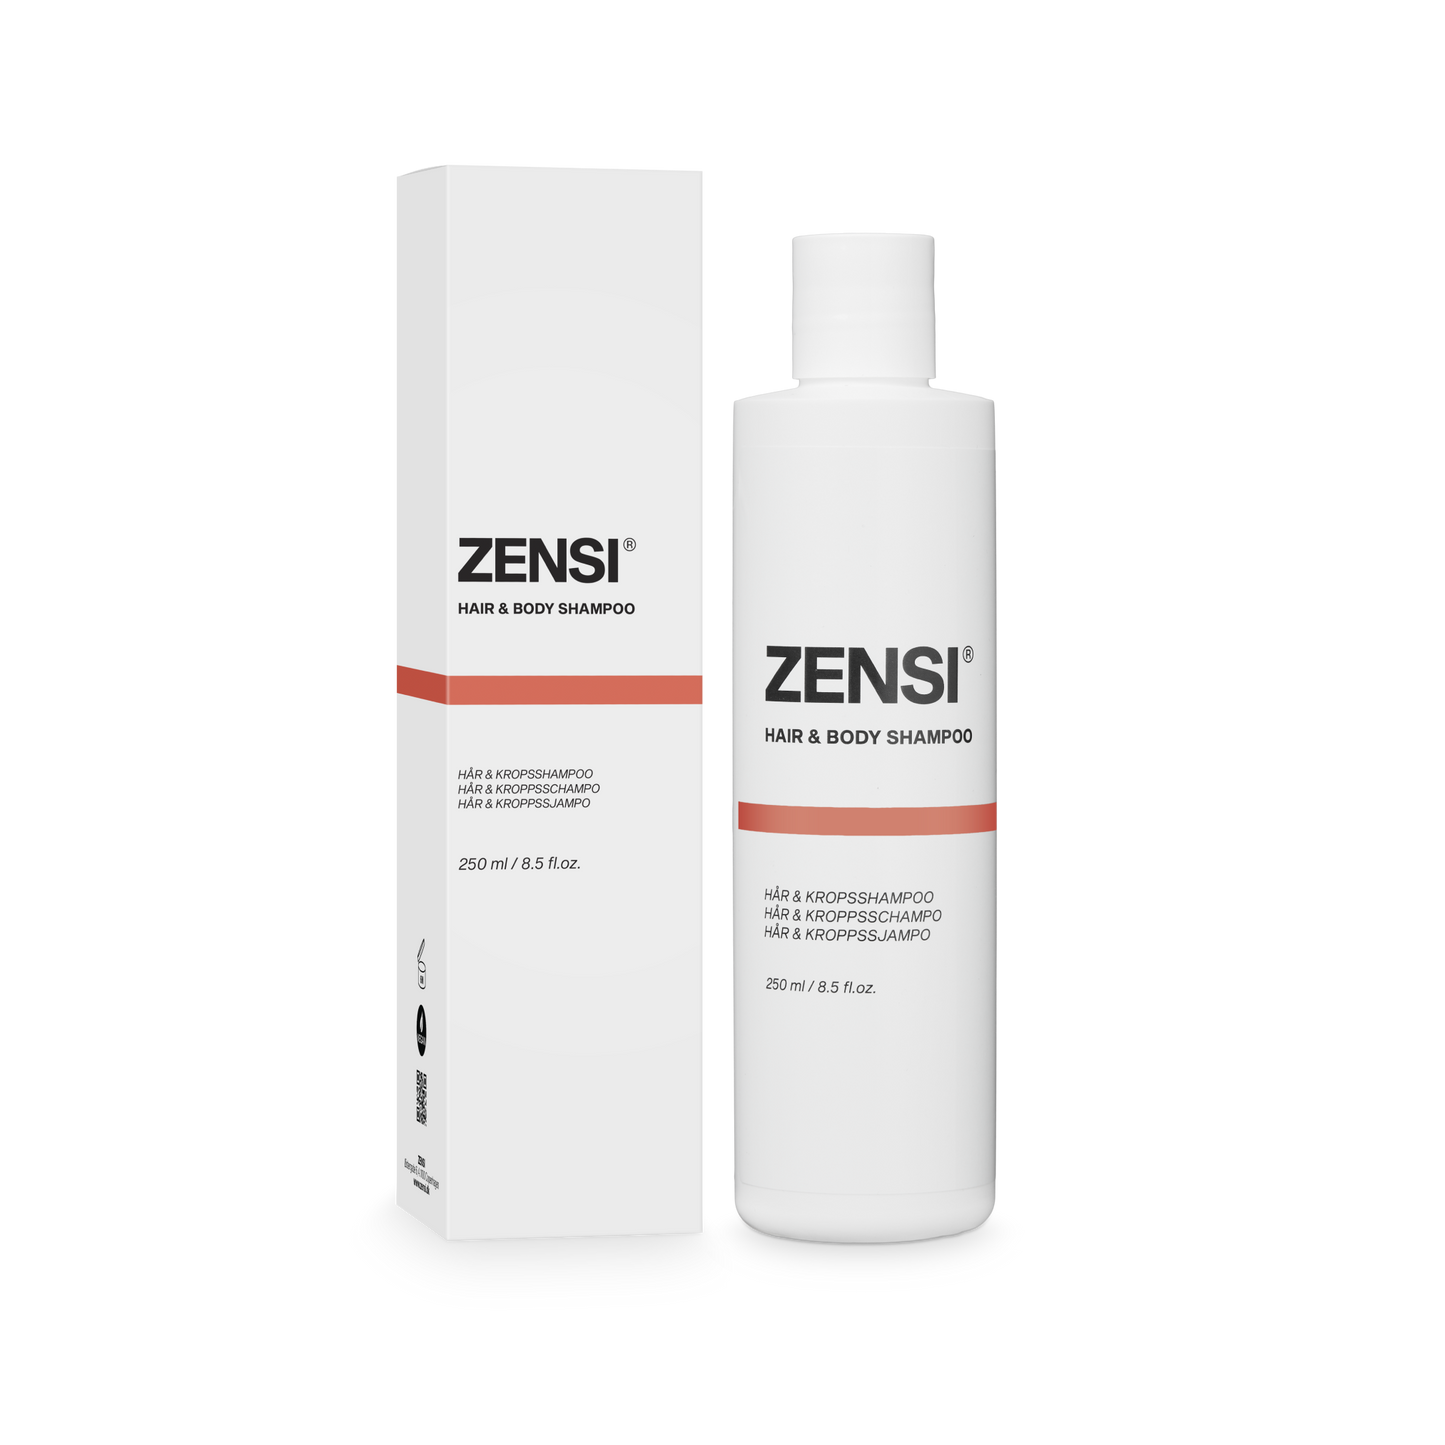 ZENSI Hair & Body Shampoo